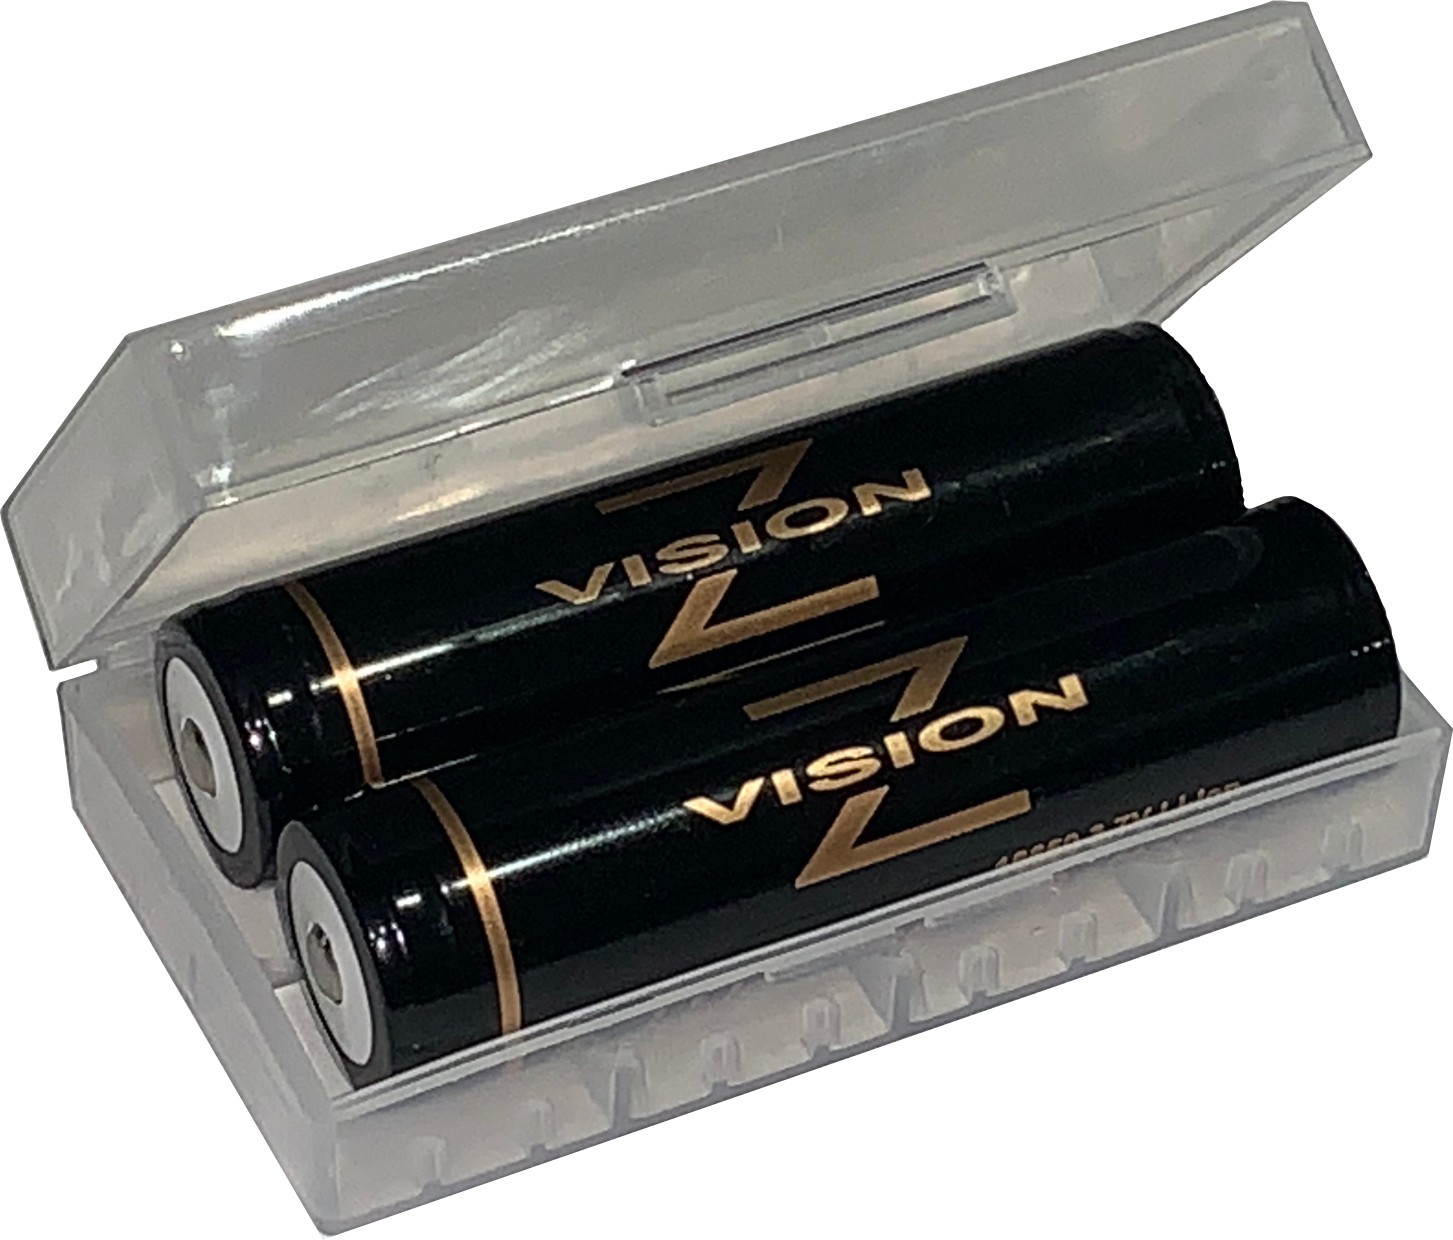 Z-Vision Battery Pack